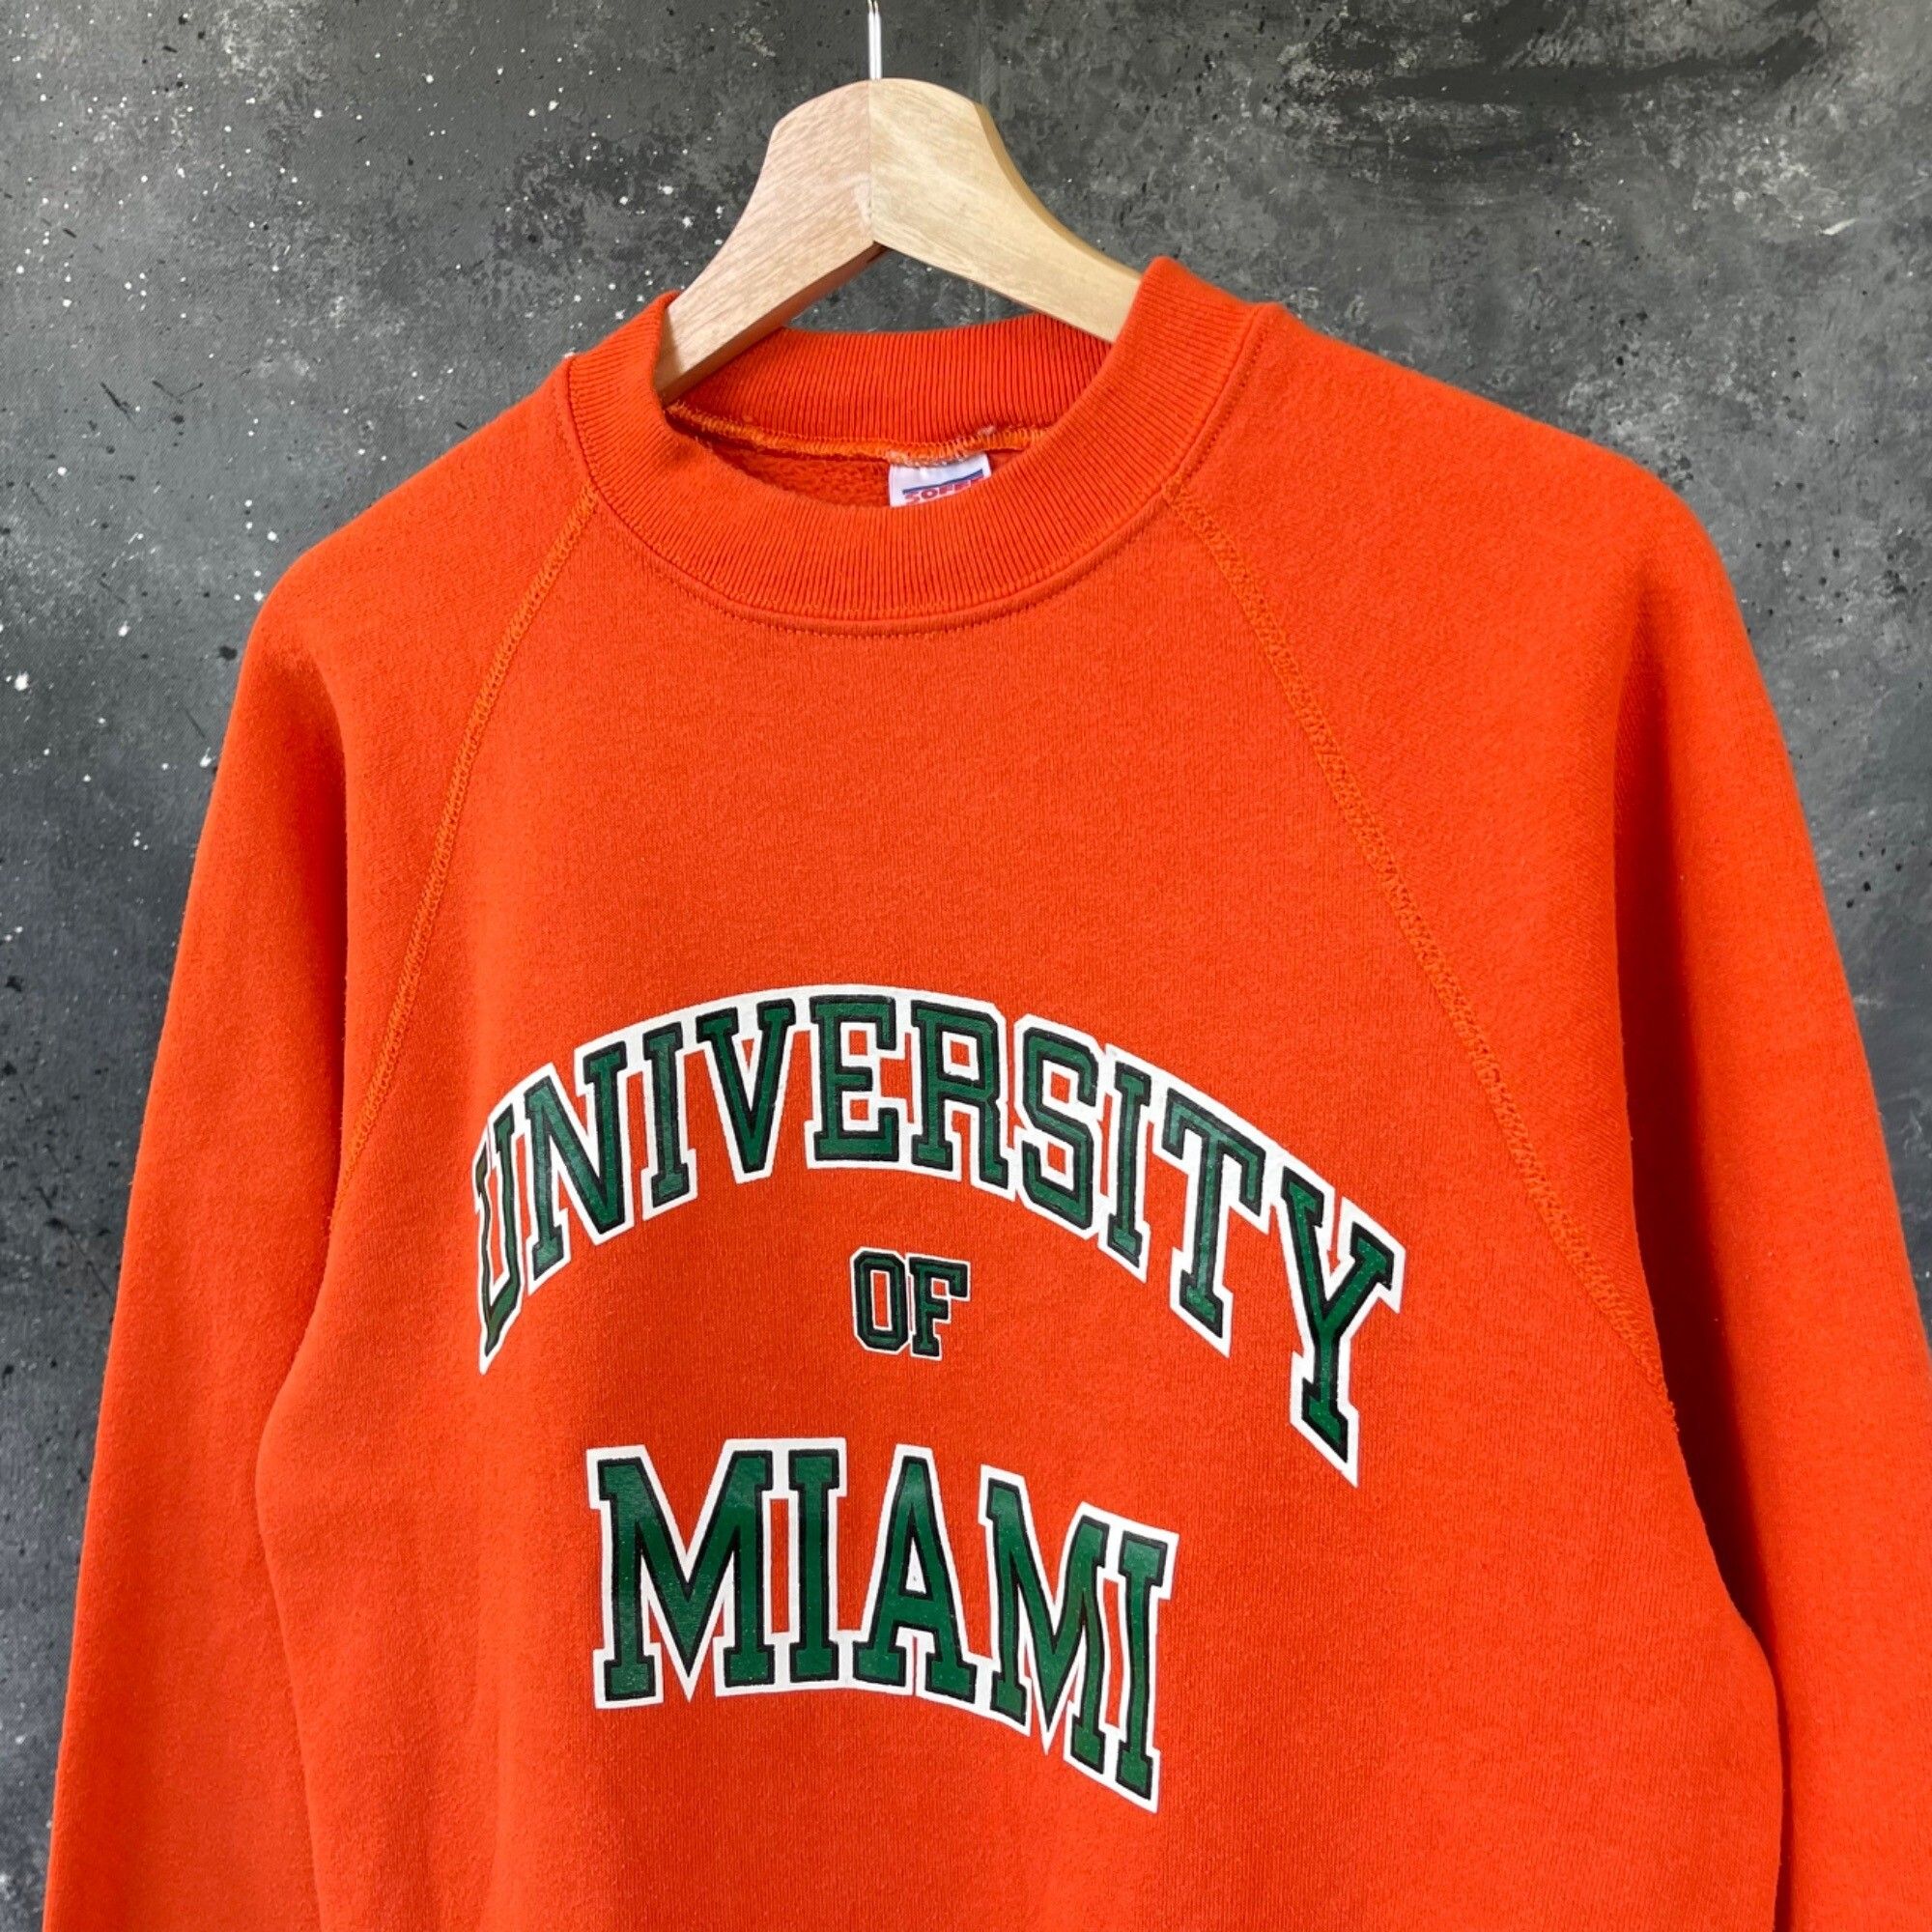 Vintage Vintage University Of Miami Crewneck Sweatshirt Size US S / EU 44-46 / 1 - 2 Preview